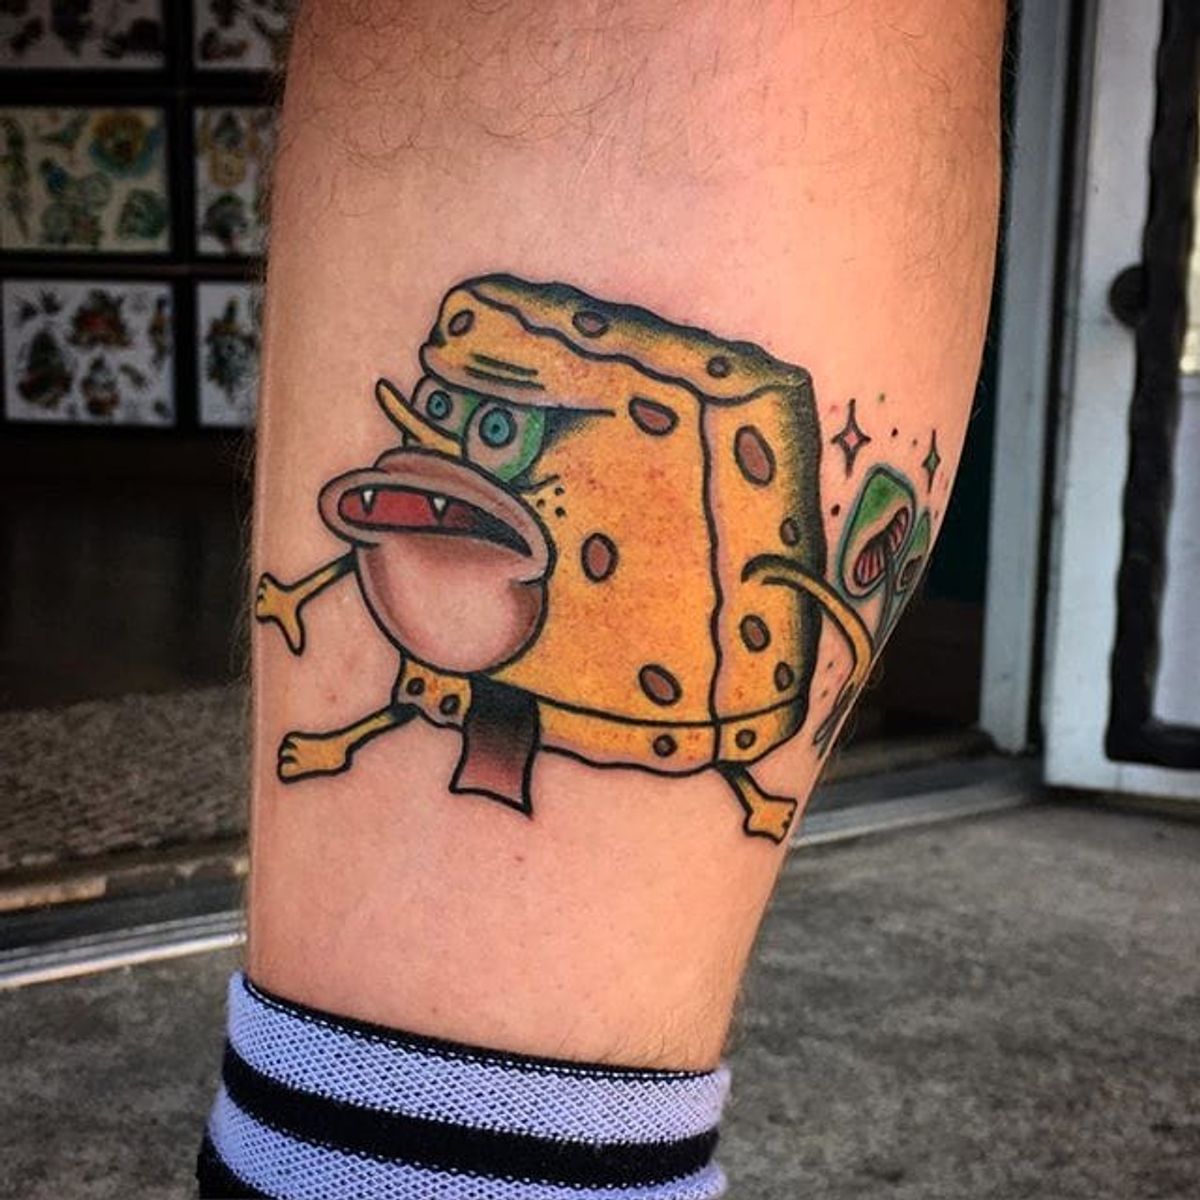 SpongeBob SquarePants tattoo by colpo on Instagram. #spongebob #spongebobsq...